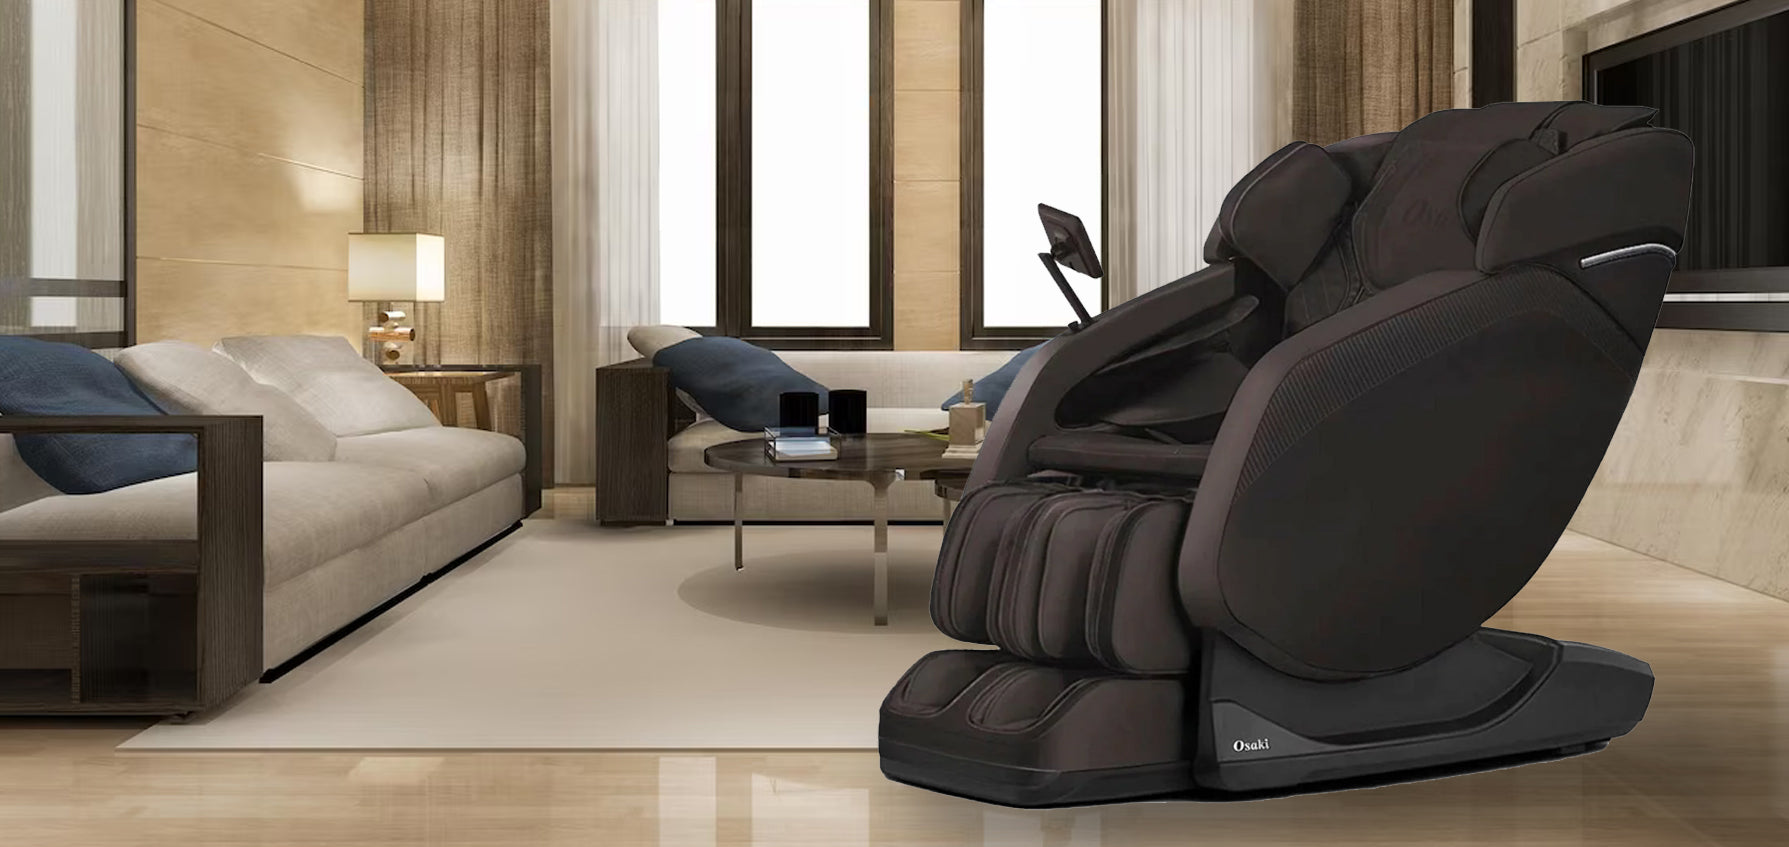 Osaki 3D-JP650 Massage Chair Room Image